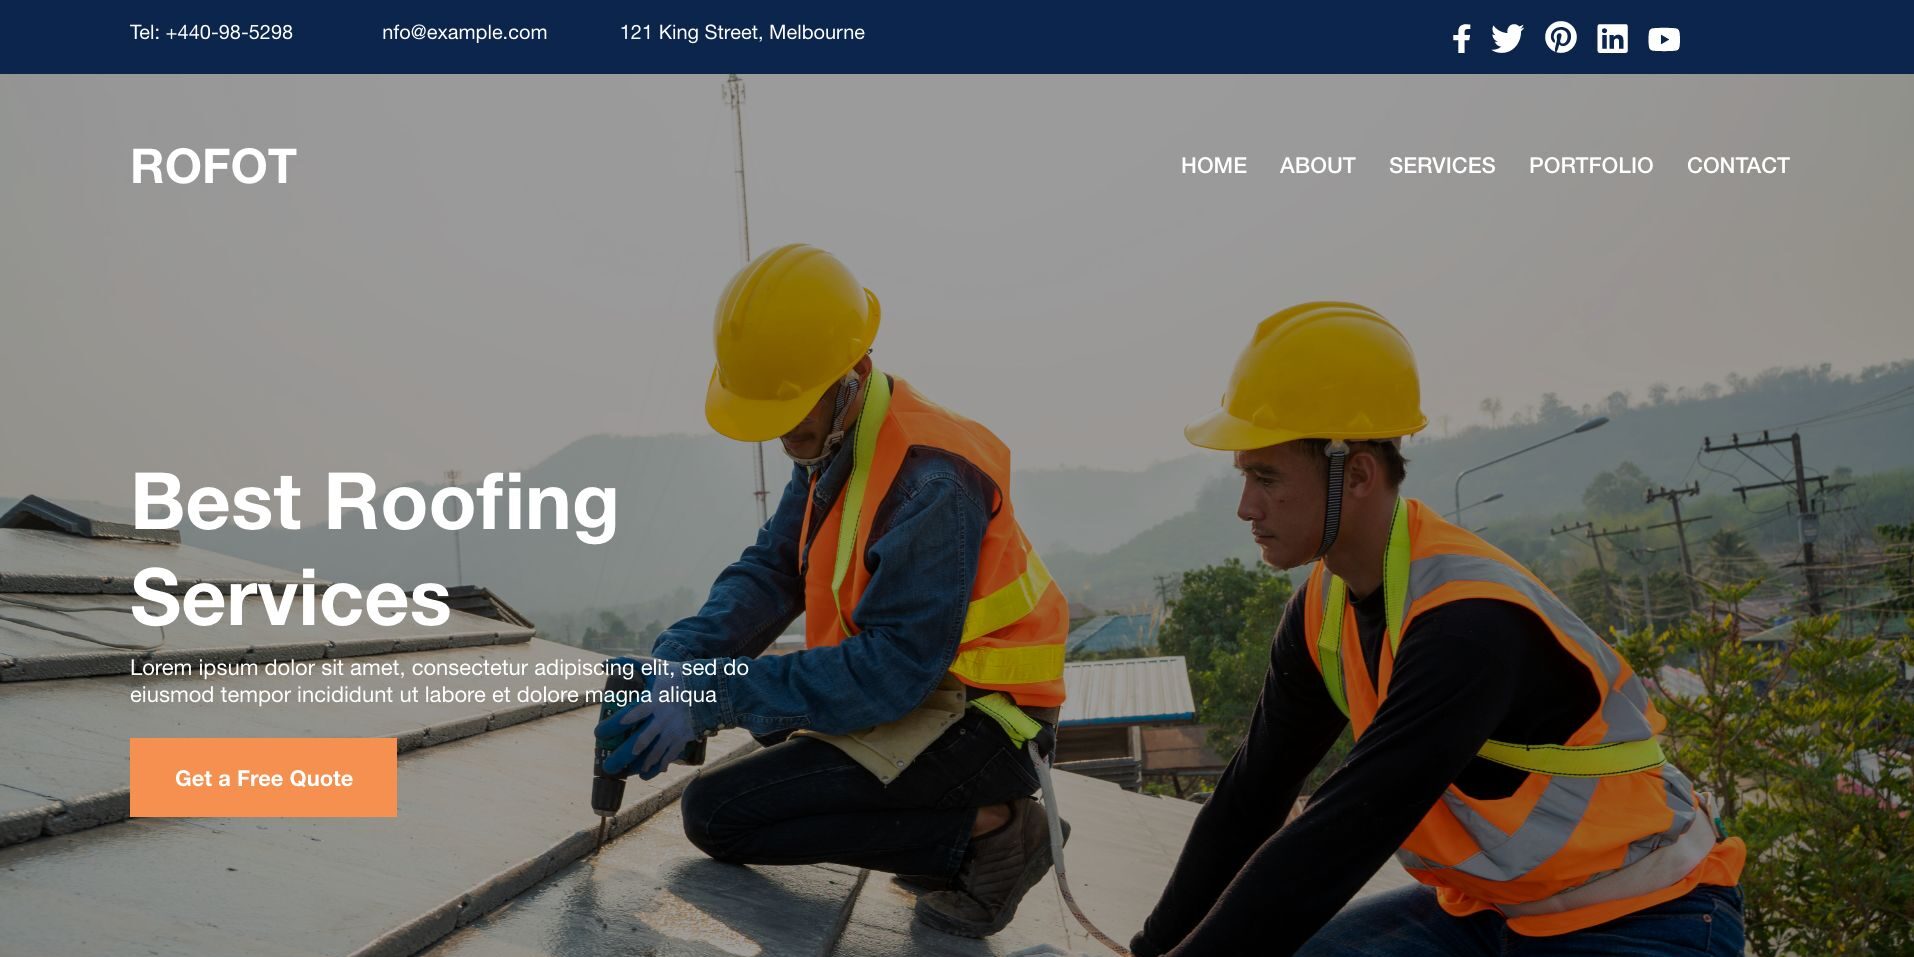 Roofing Services Website Design